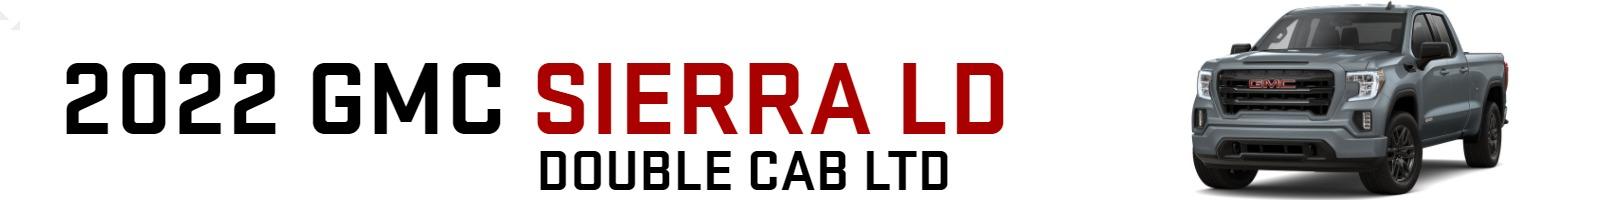 2022 GMC Sierra LD Double Cab LTD